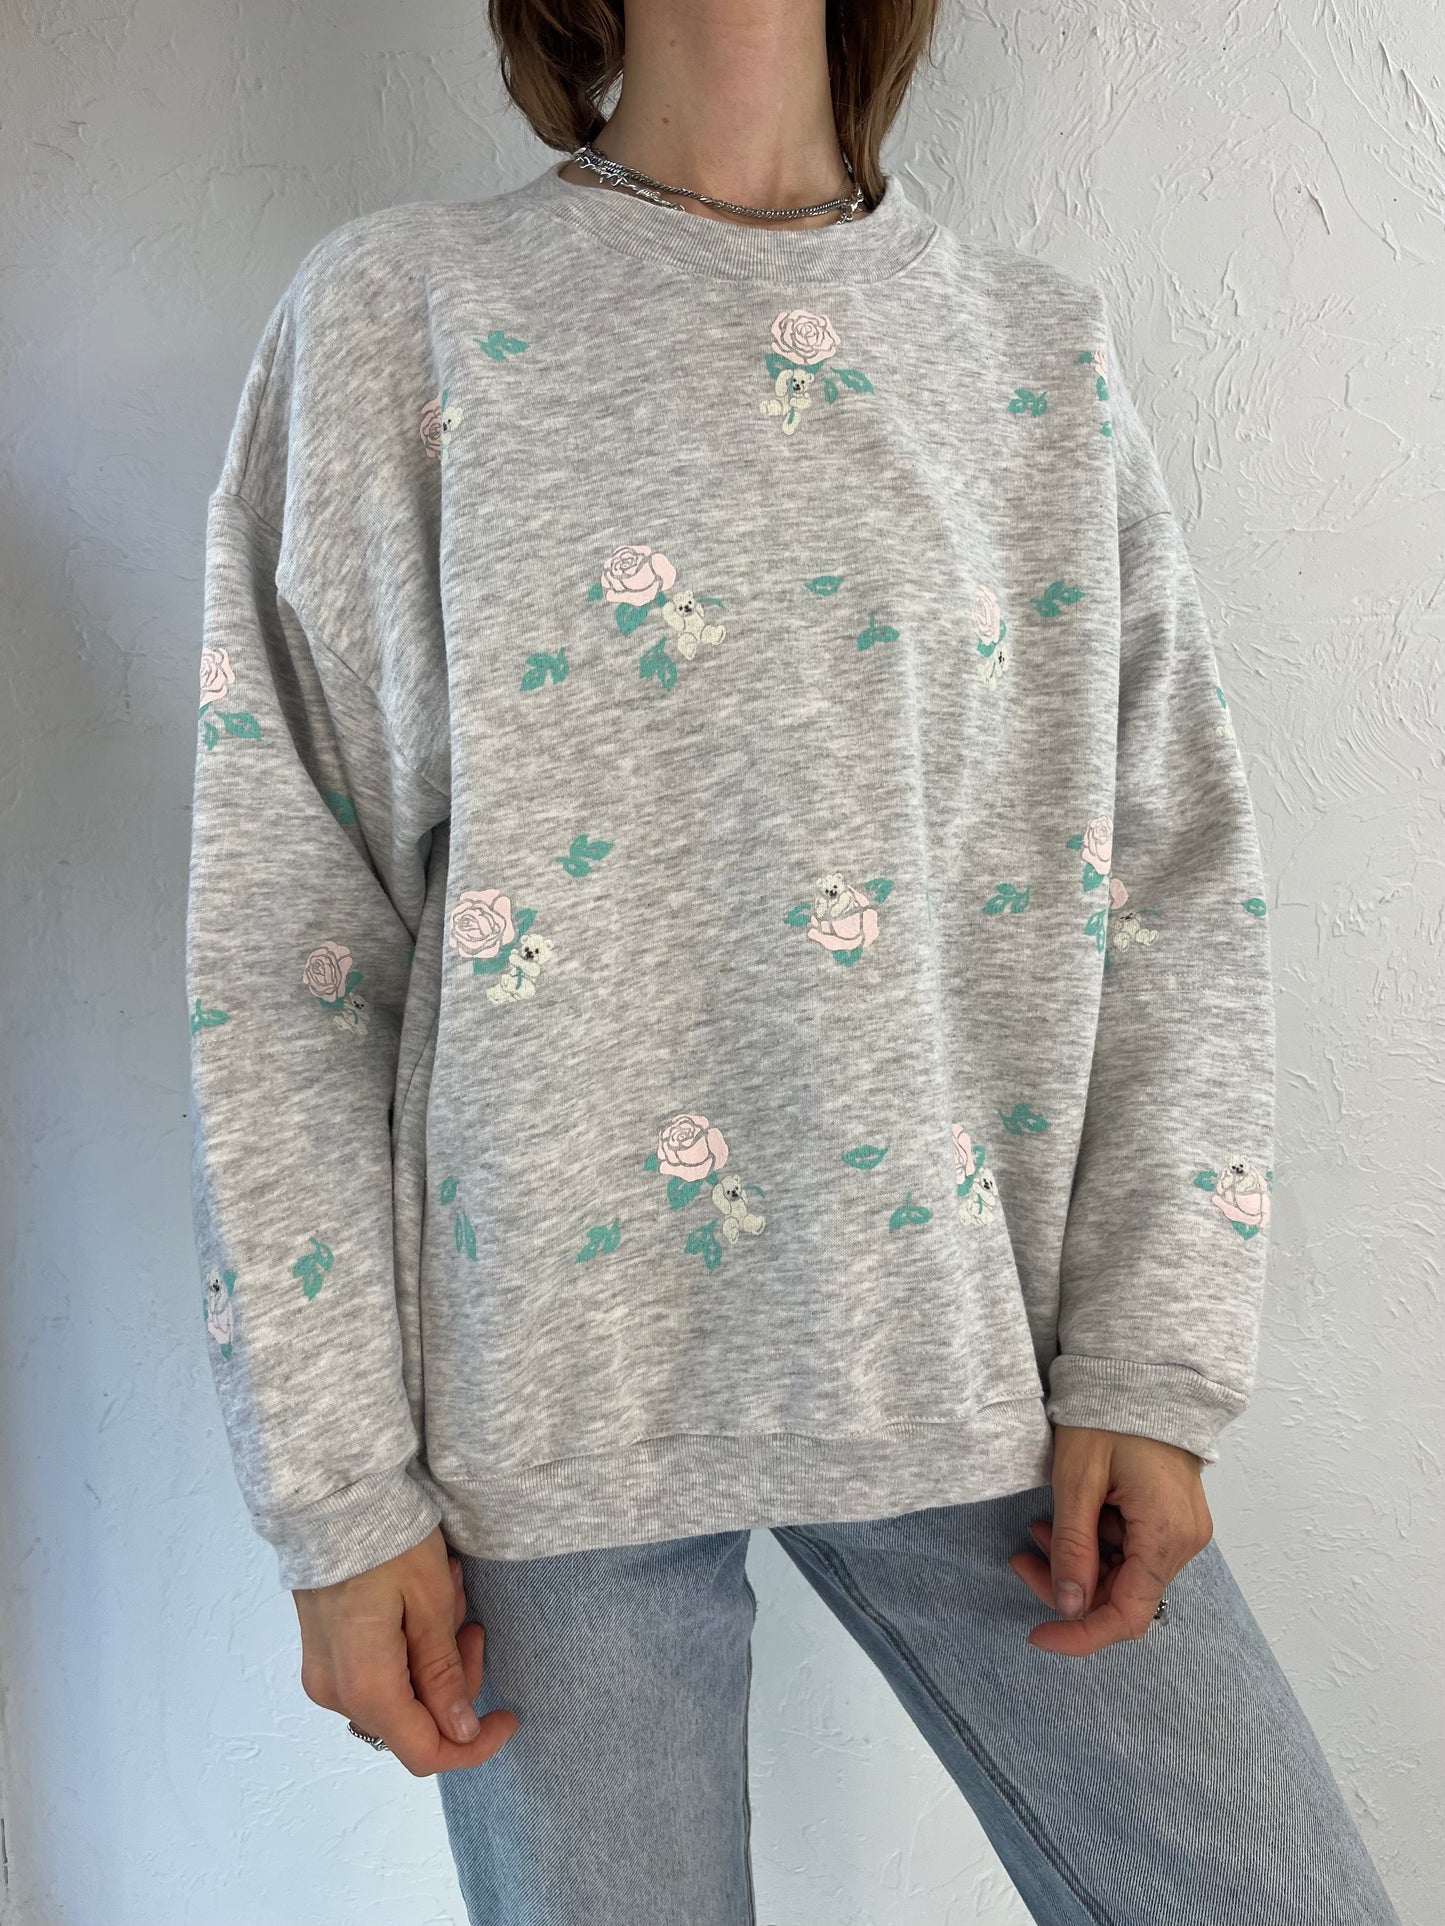 90s 'Spumoni' Grey Rose Teddy Bear Crew Neck Sweatshirt / Medium